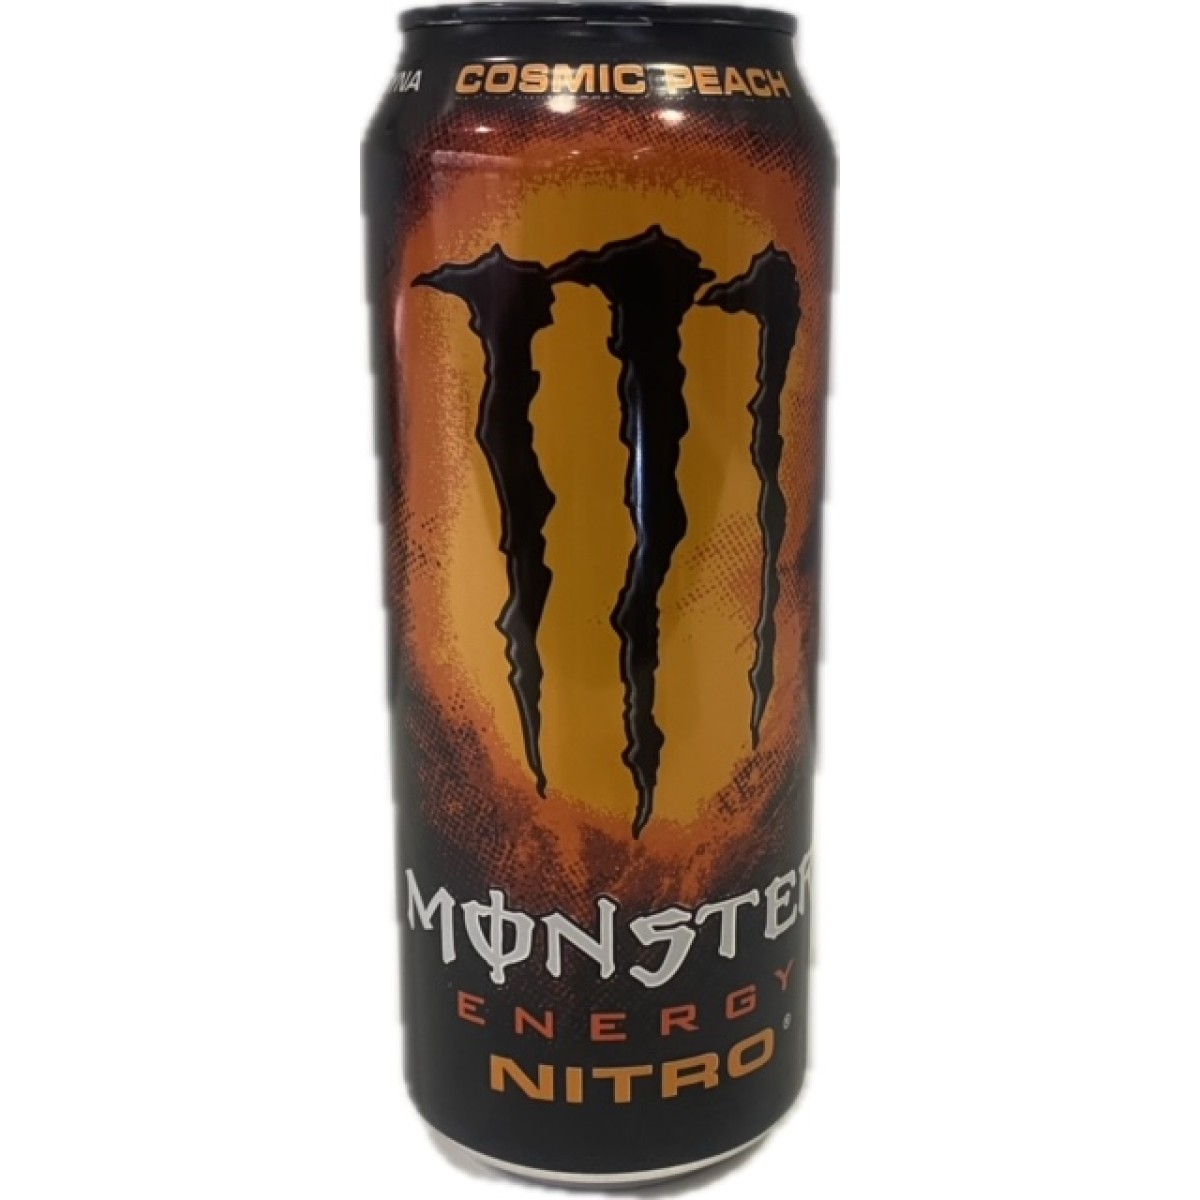 Monster nitro cosmic peach 500ml